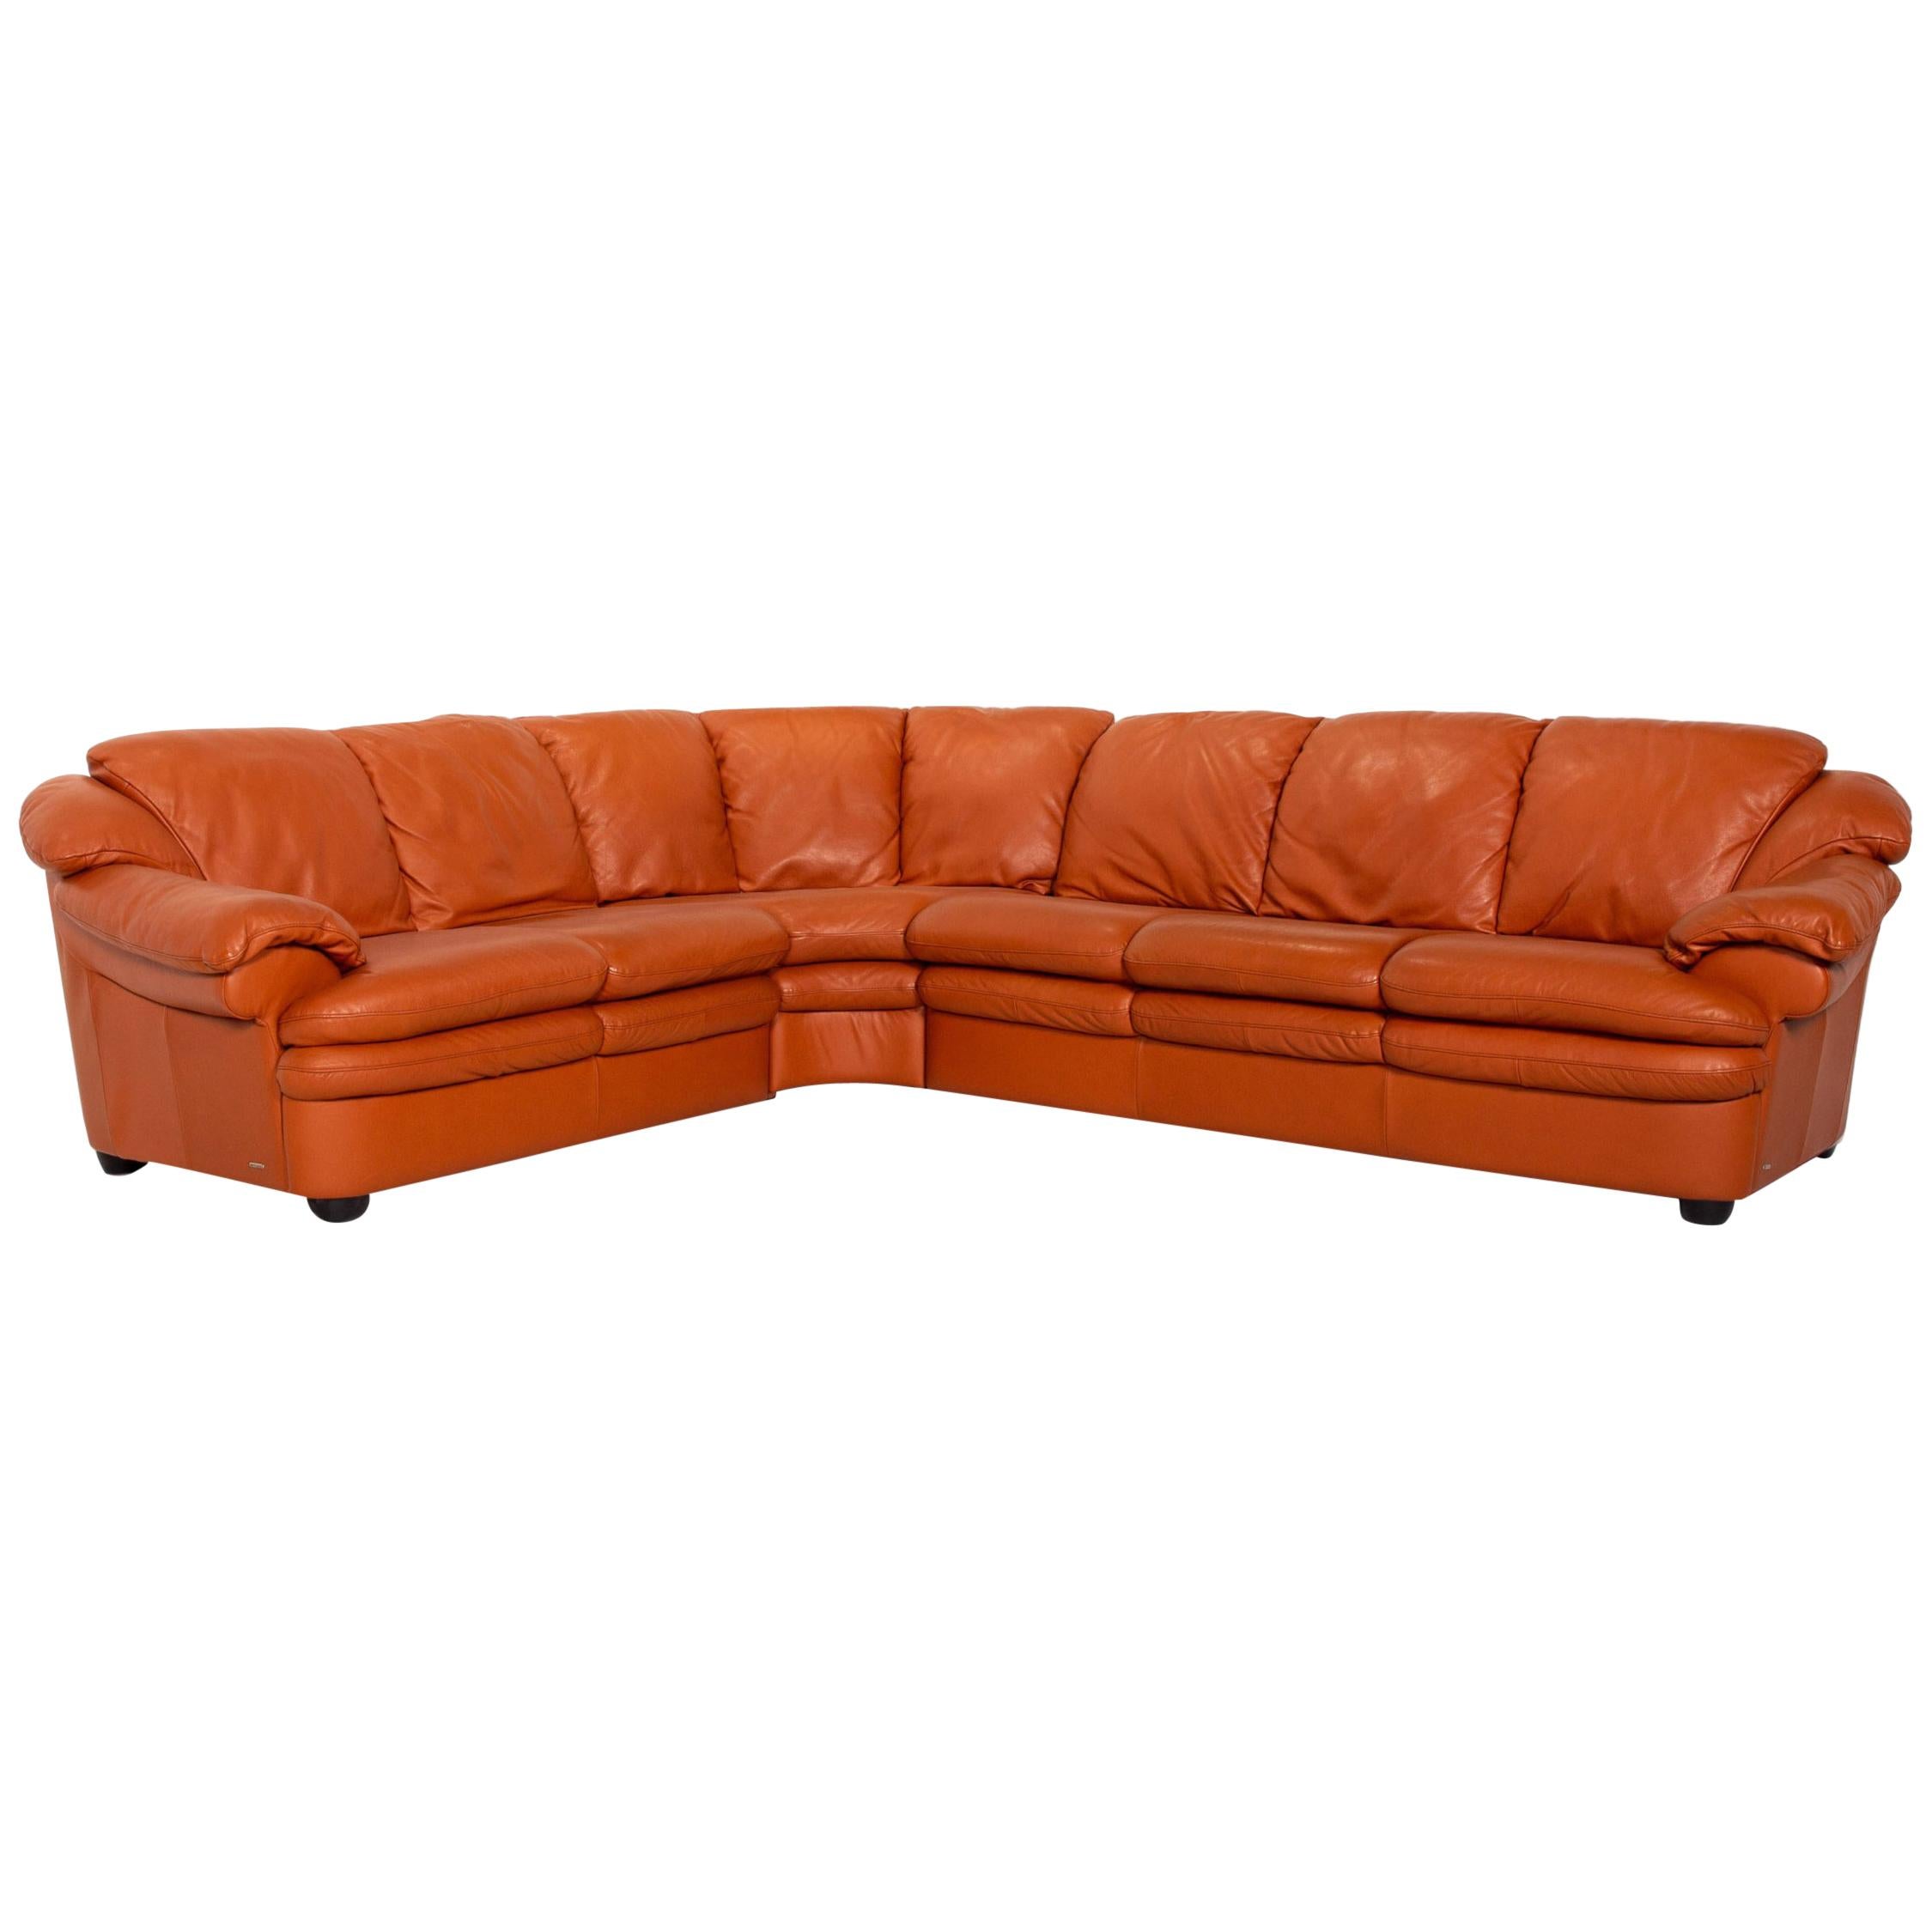 Natuzzi Leather Corner Sofa Terracotta Orange Sofa Couch For Sale